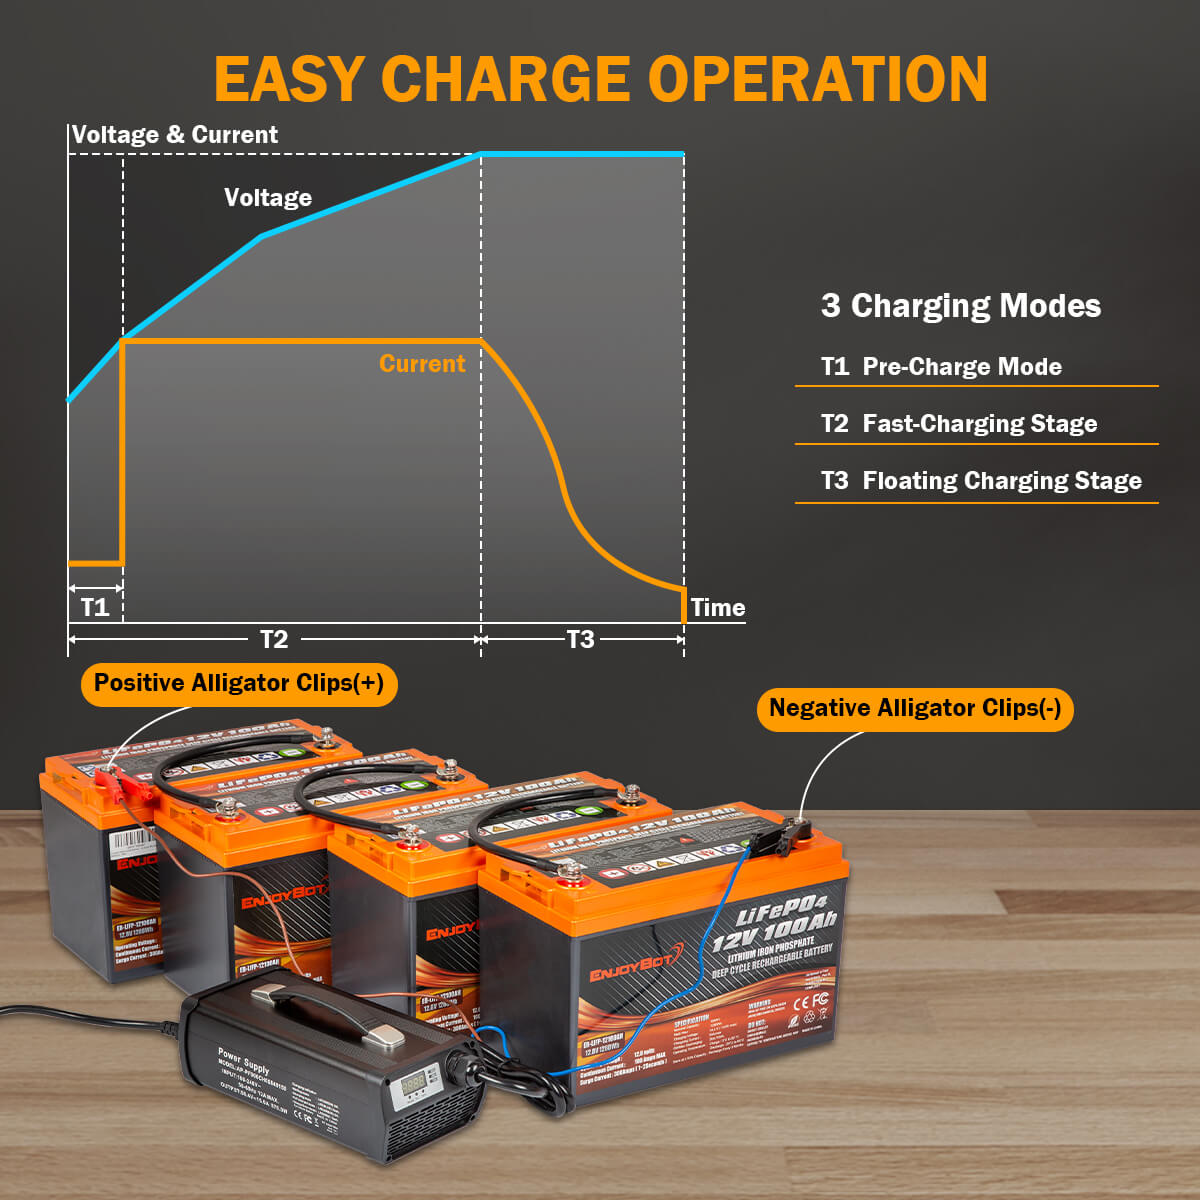 Enjoybot 58.4V 15A LiFePO4 Lithium Battery Charger for 48 Volt Battery with Alligator Clips, 0V Charging Activation